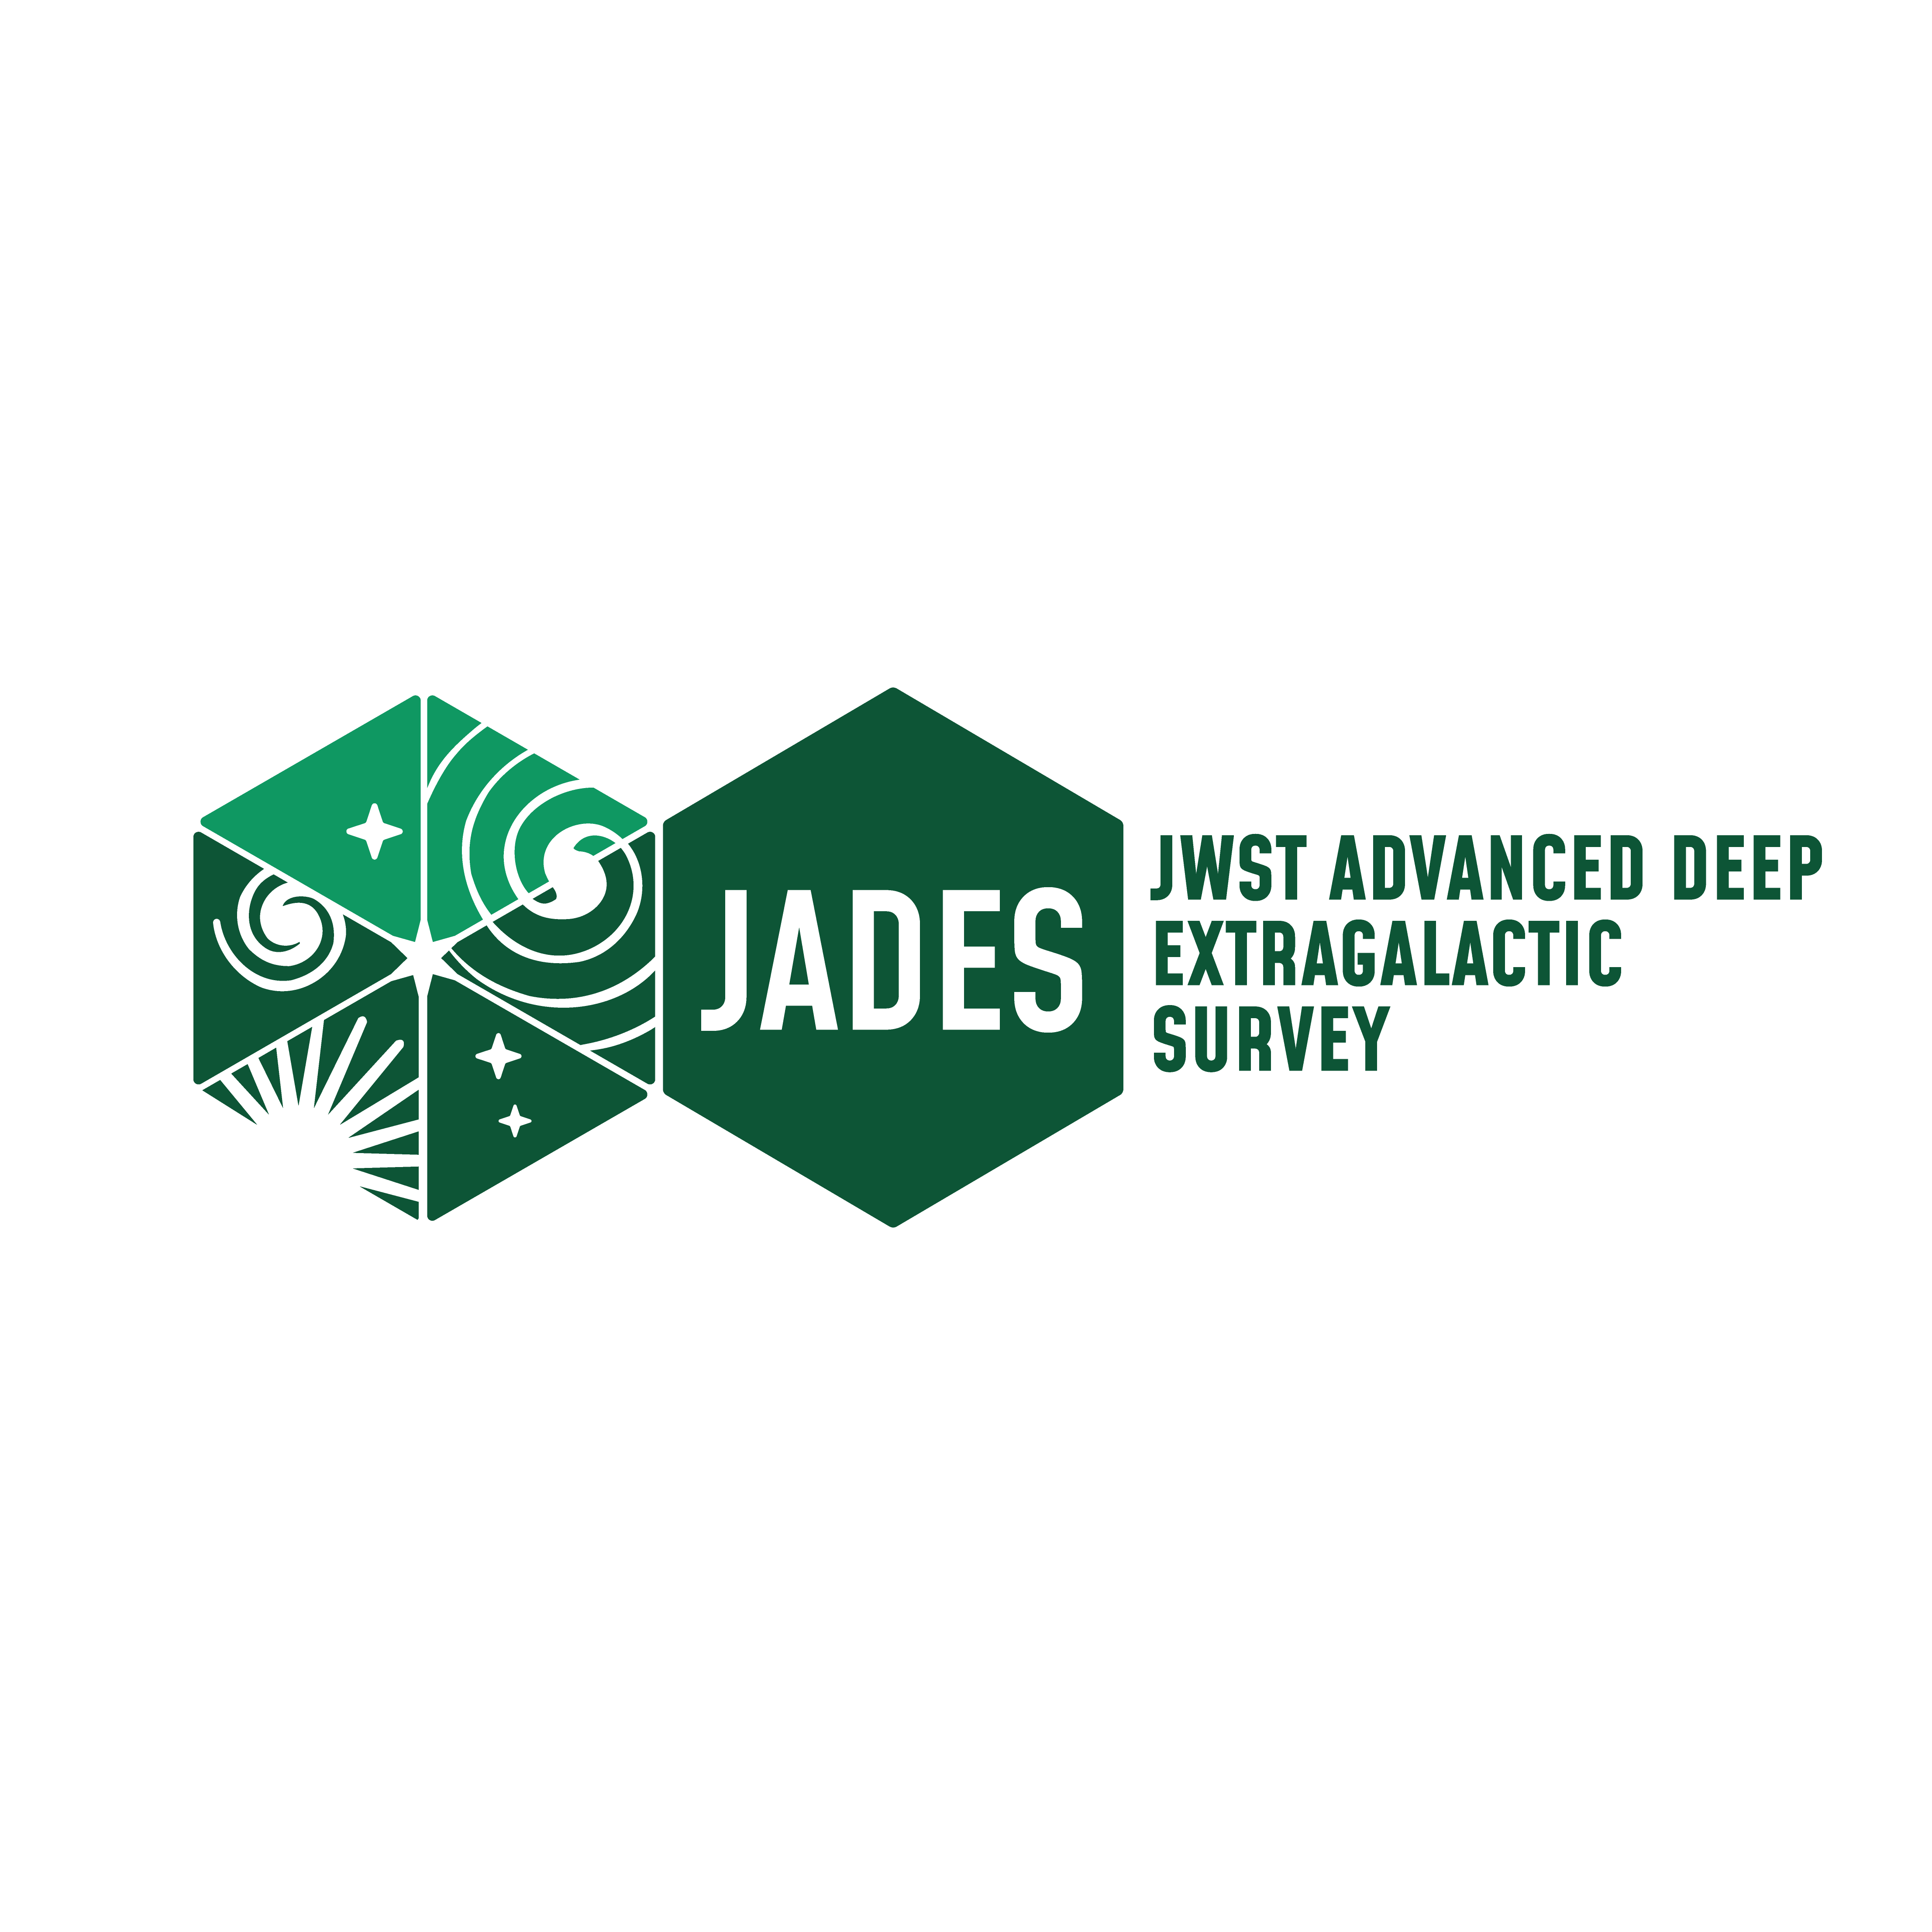 Logo for the JADES survey